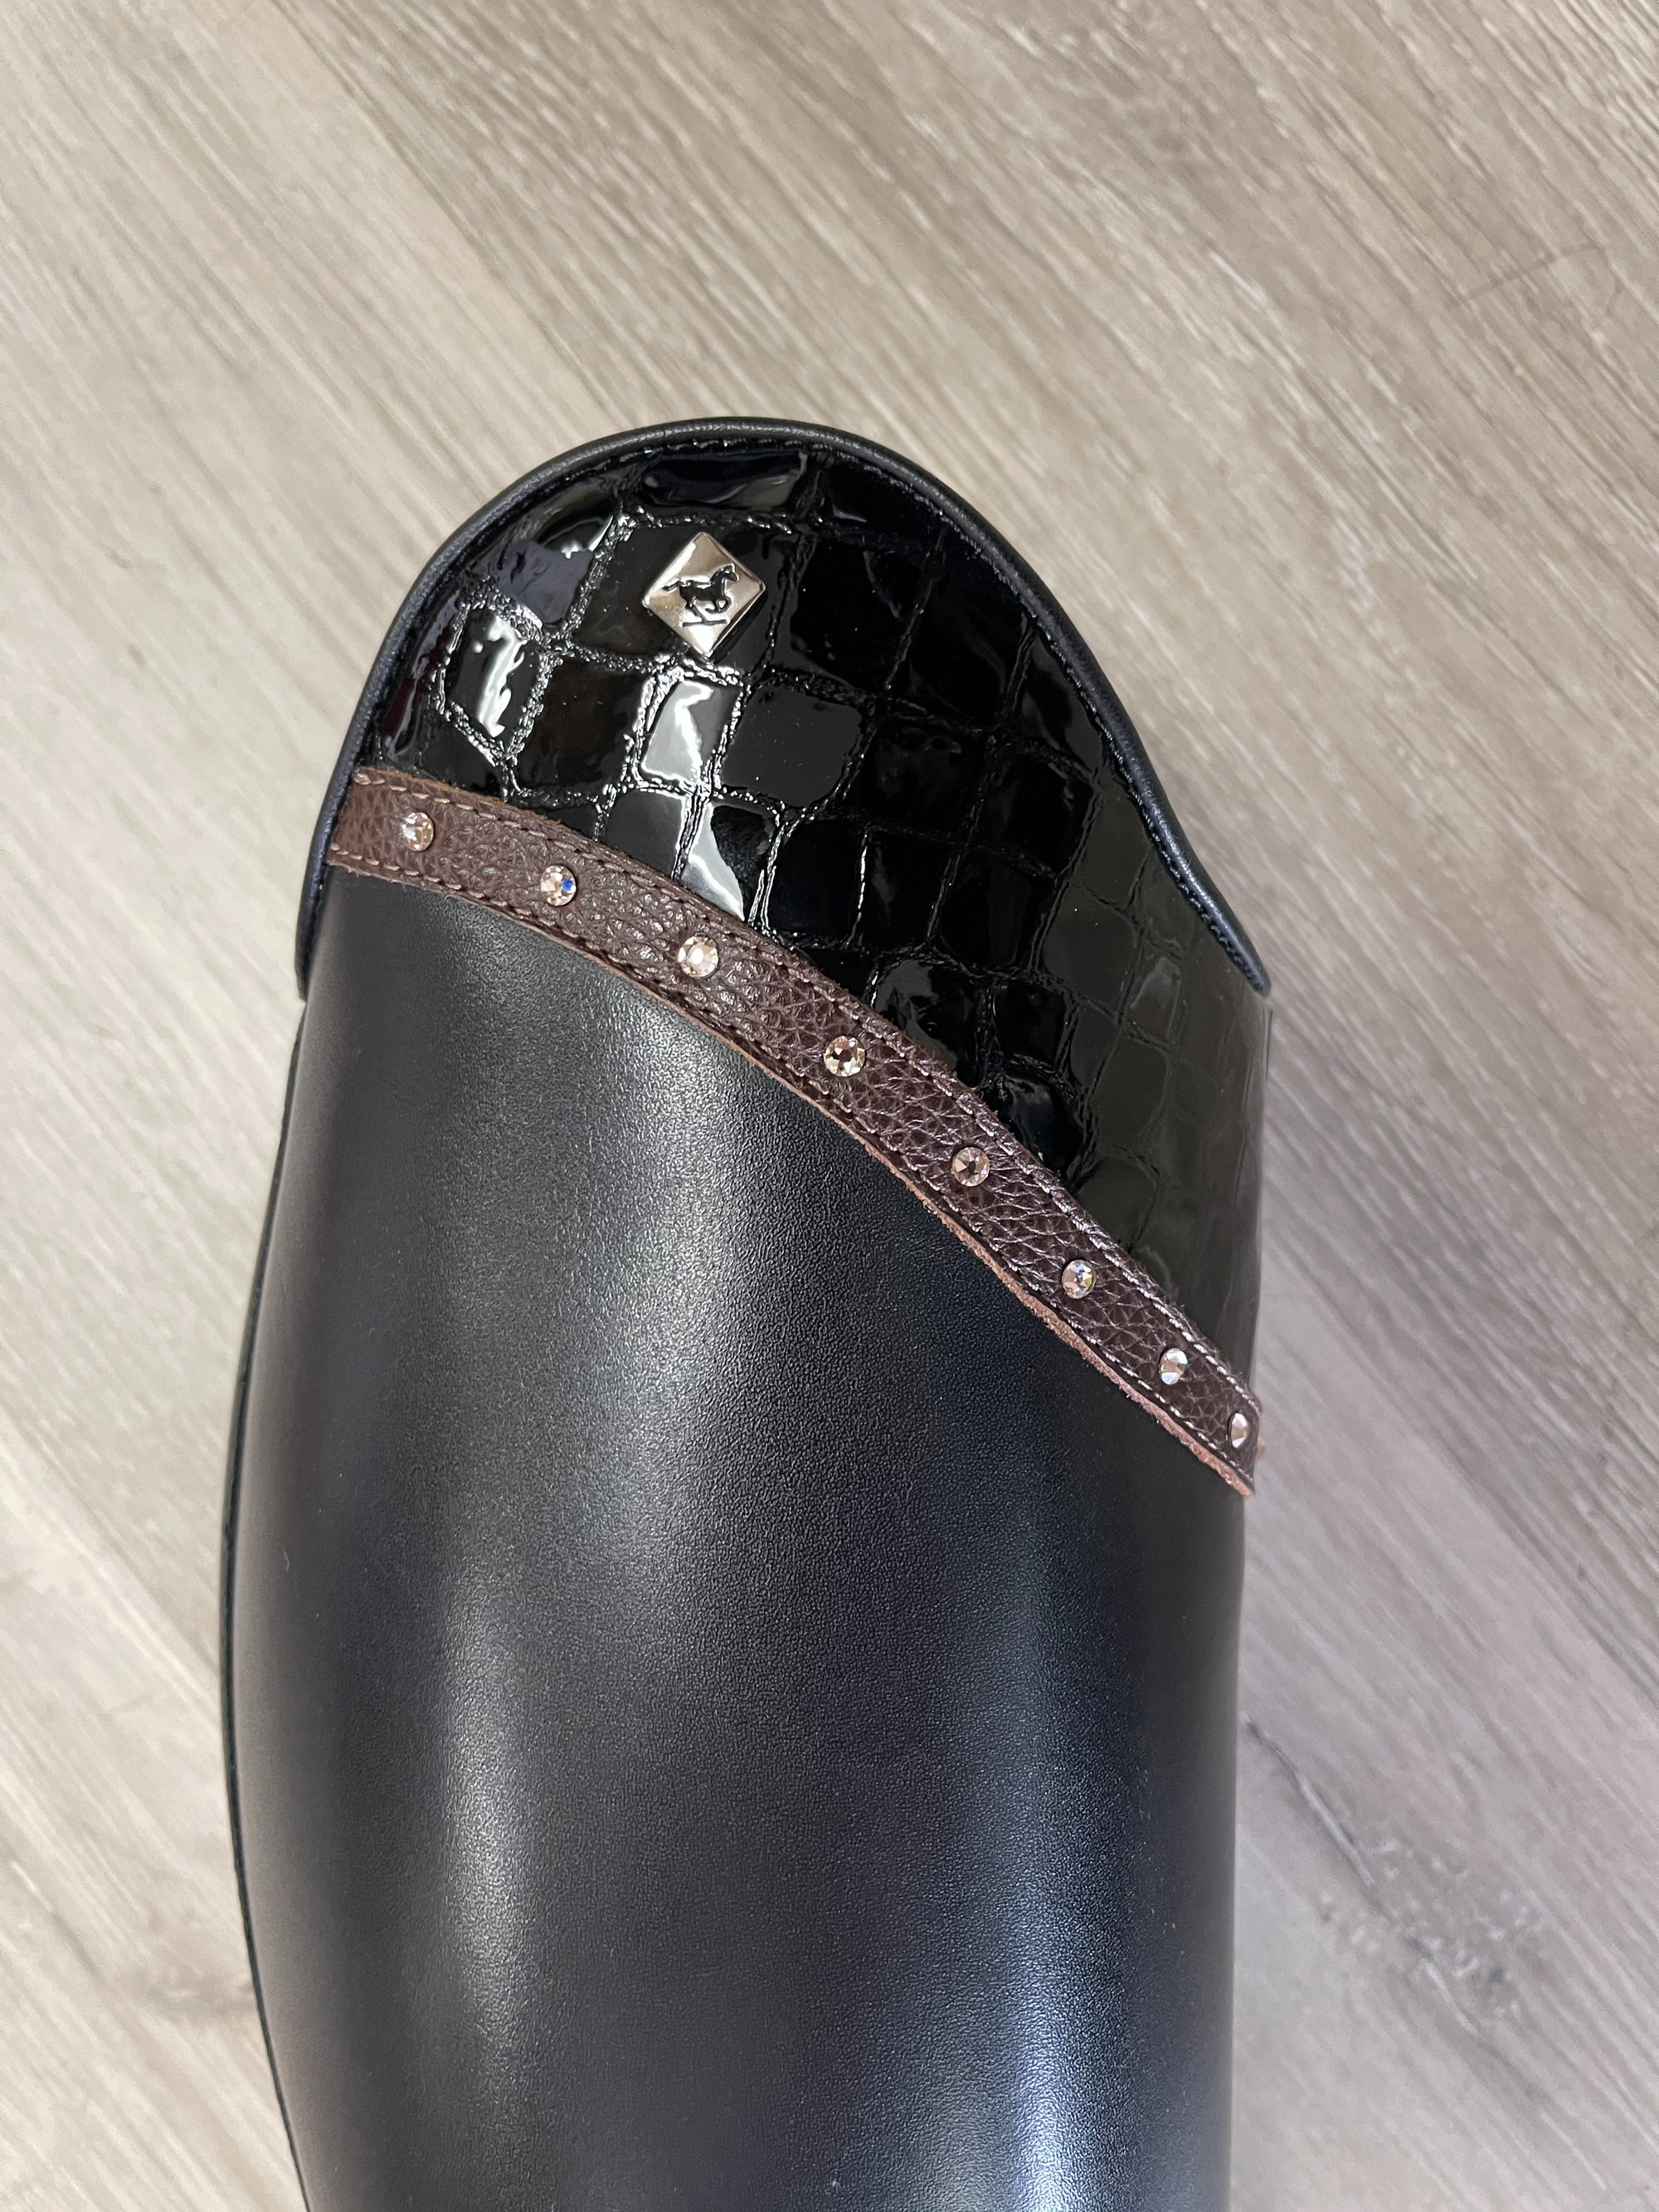 DeNiro Tiziano Dressage Custom Boot With Moka Accent